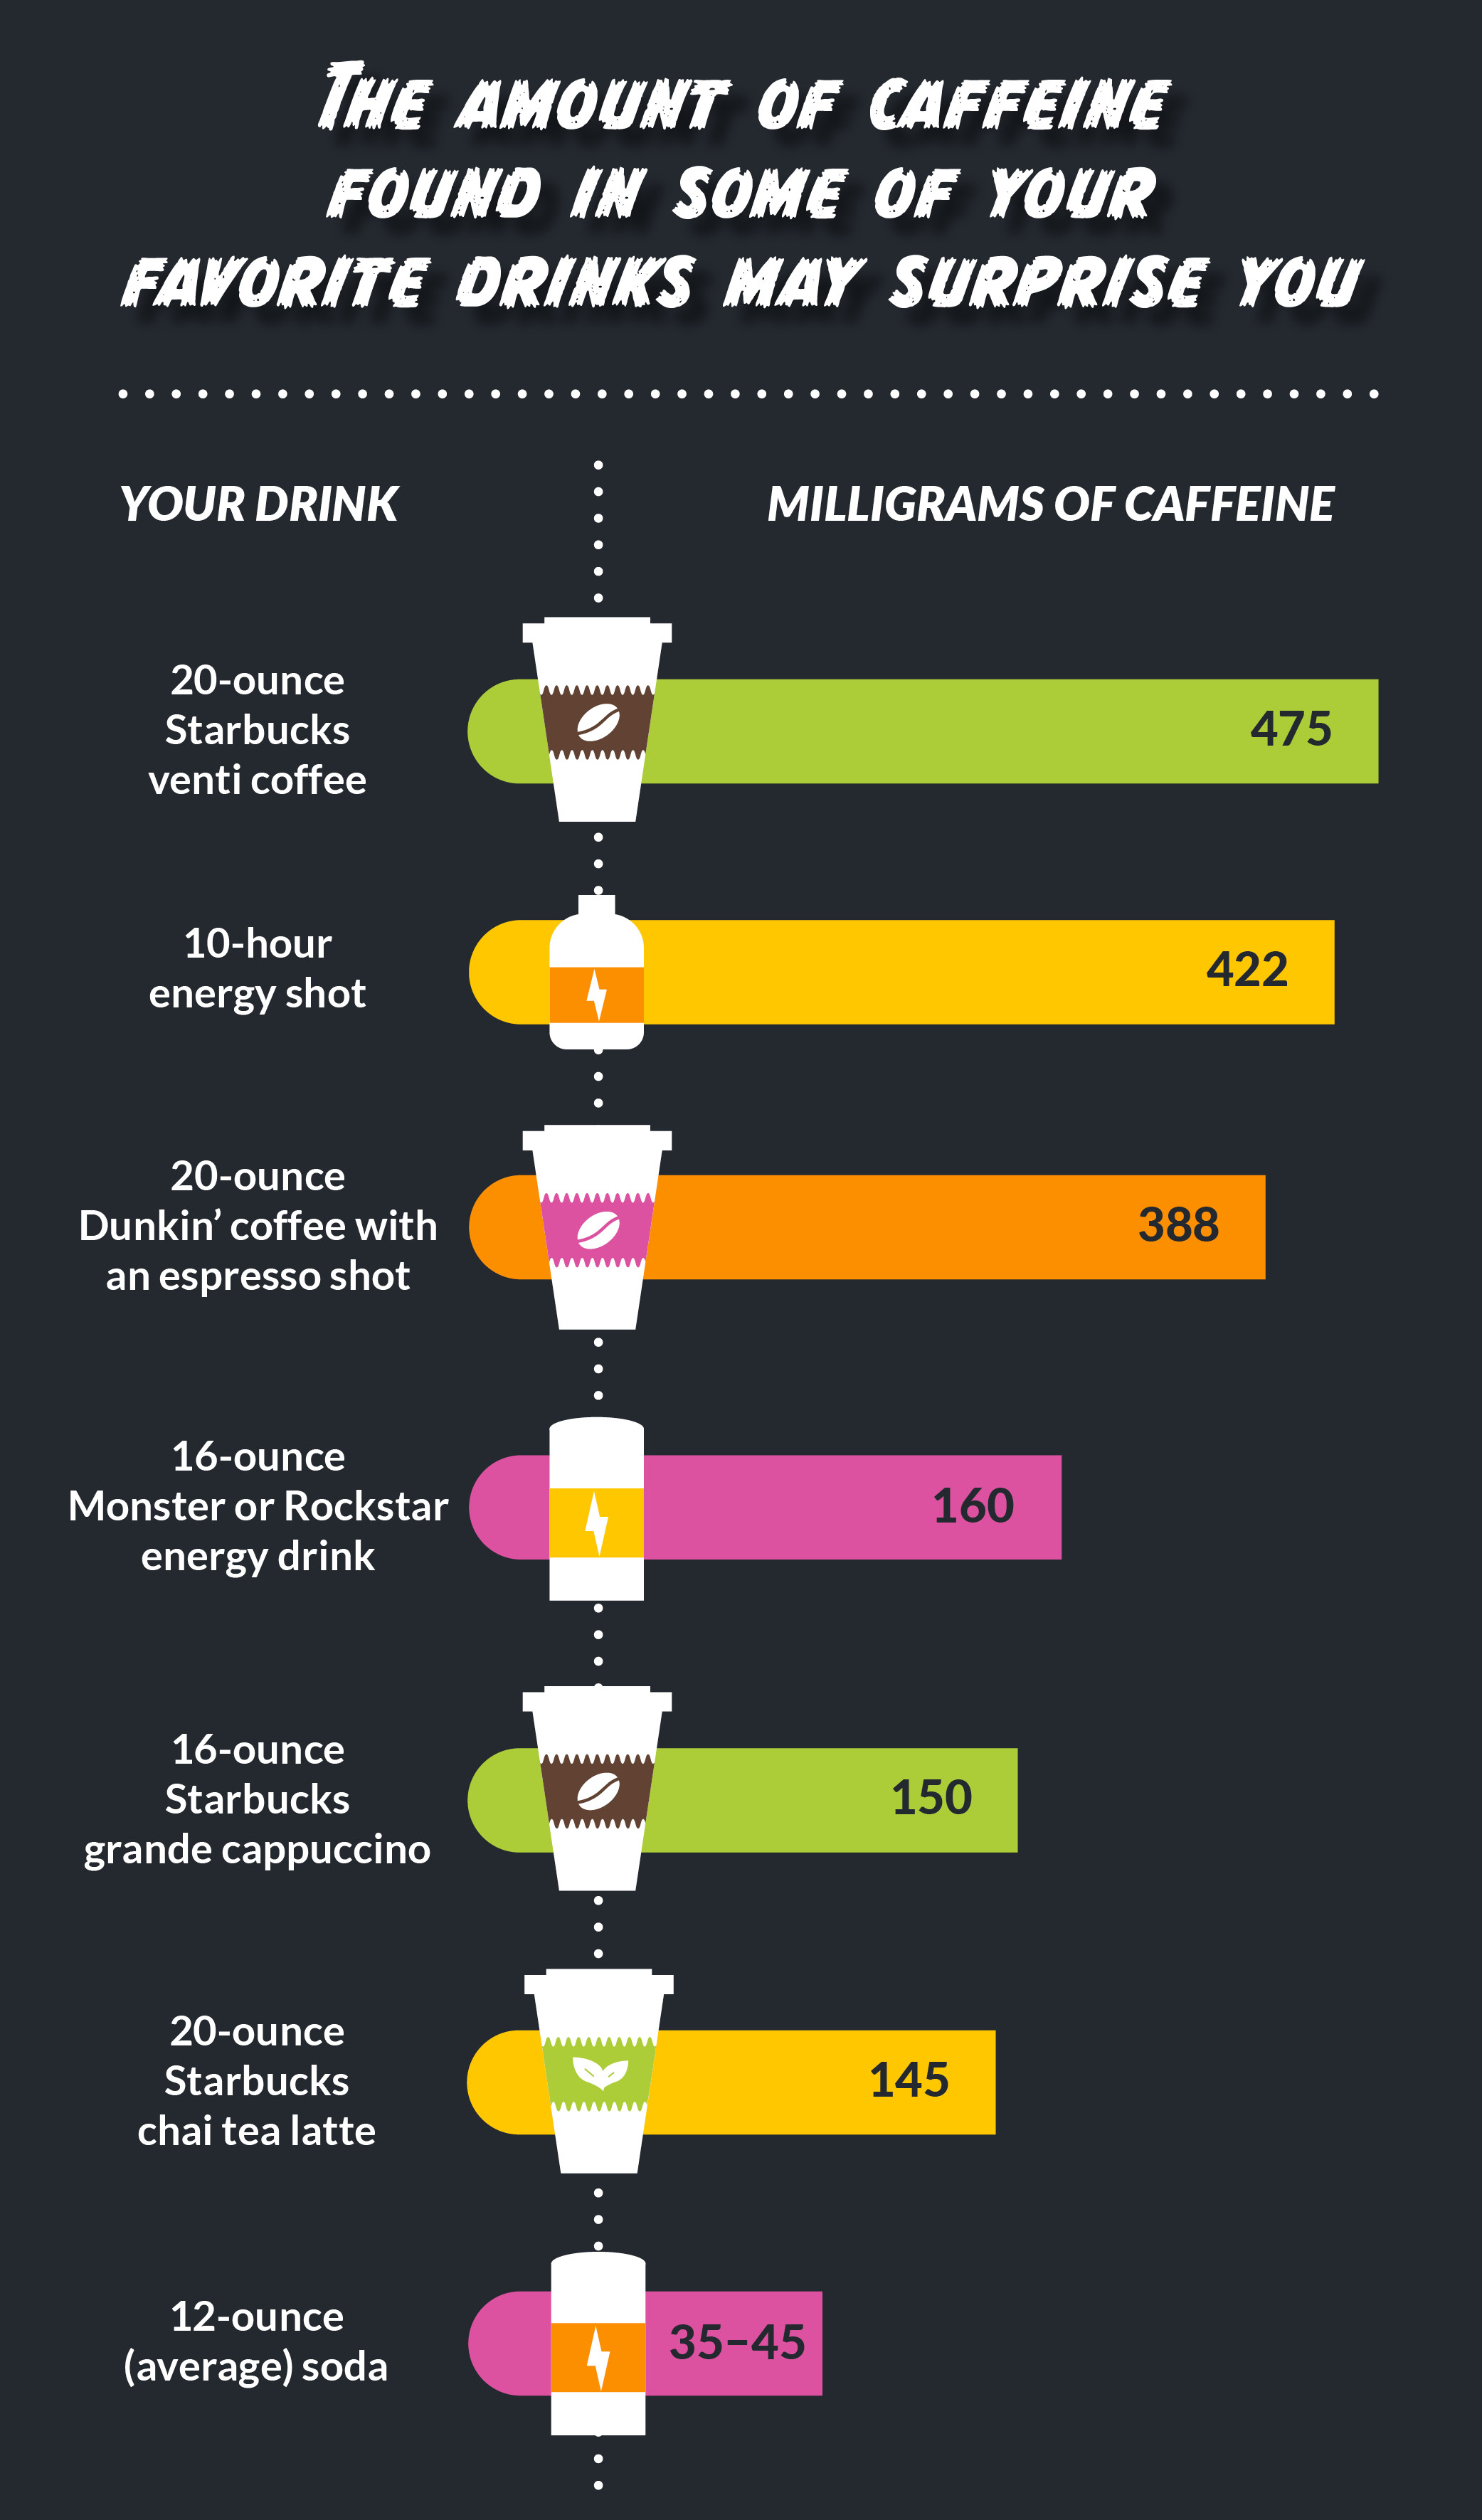 6 Tips for Reducing Caffeine Intake Gradually